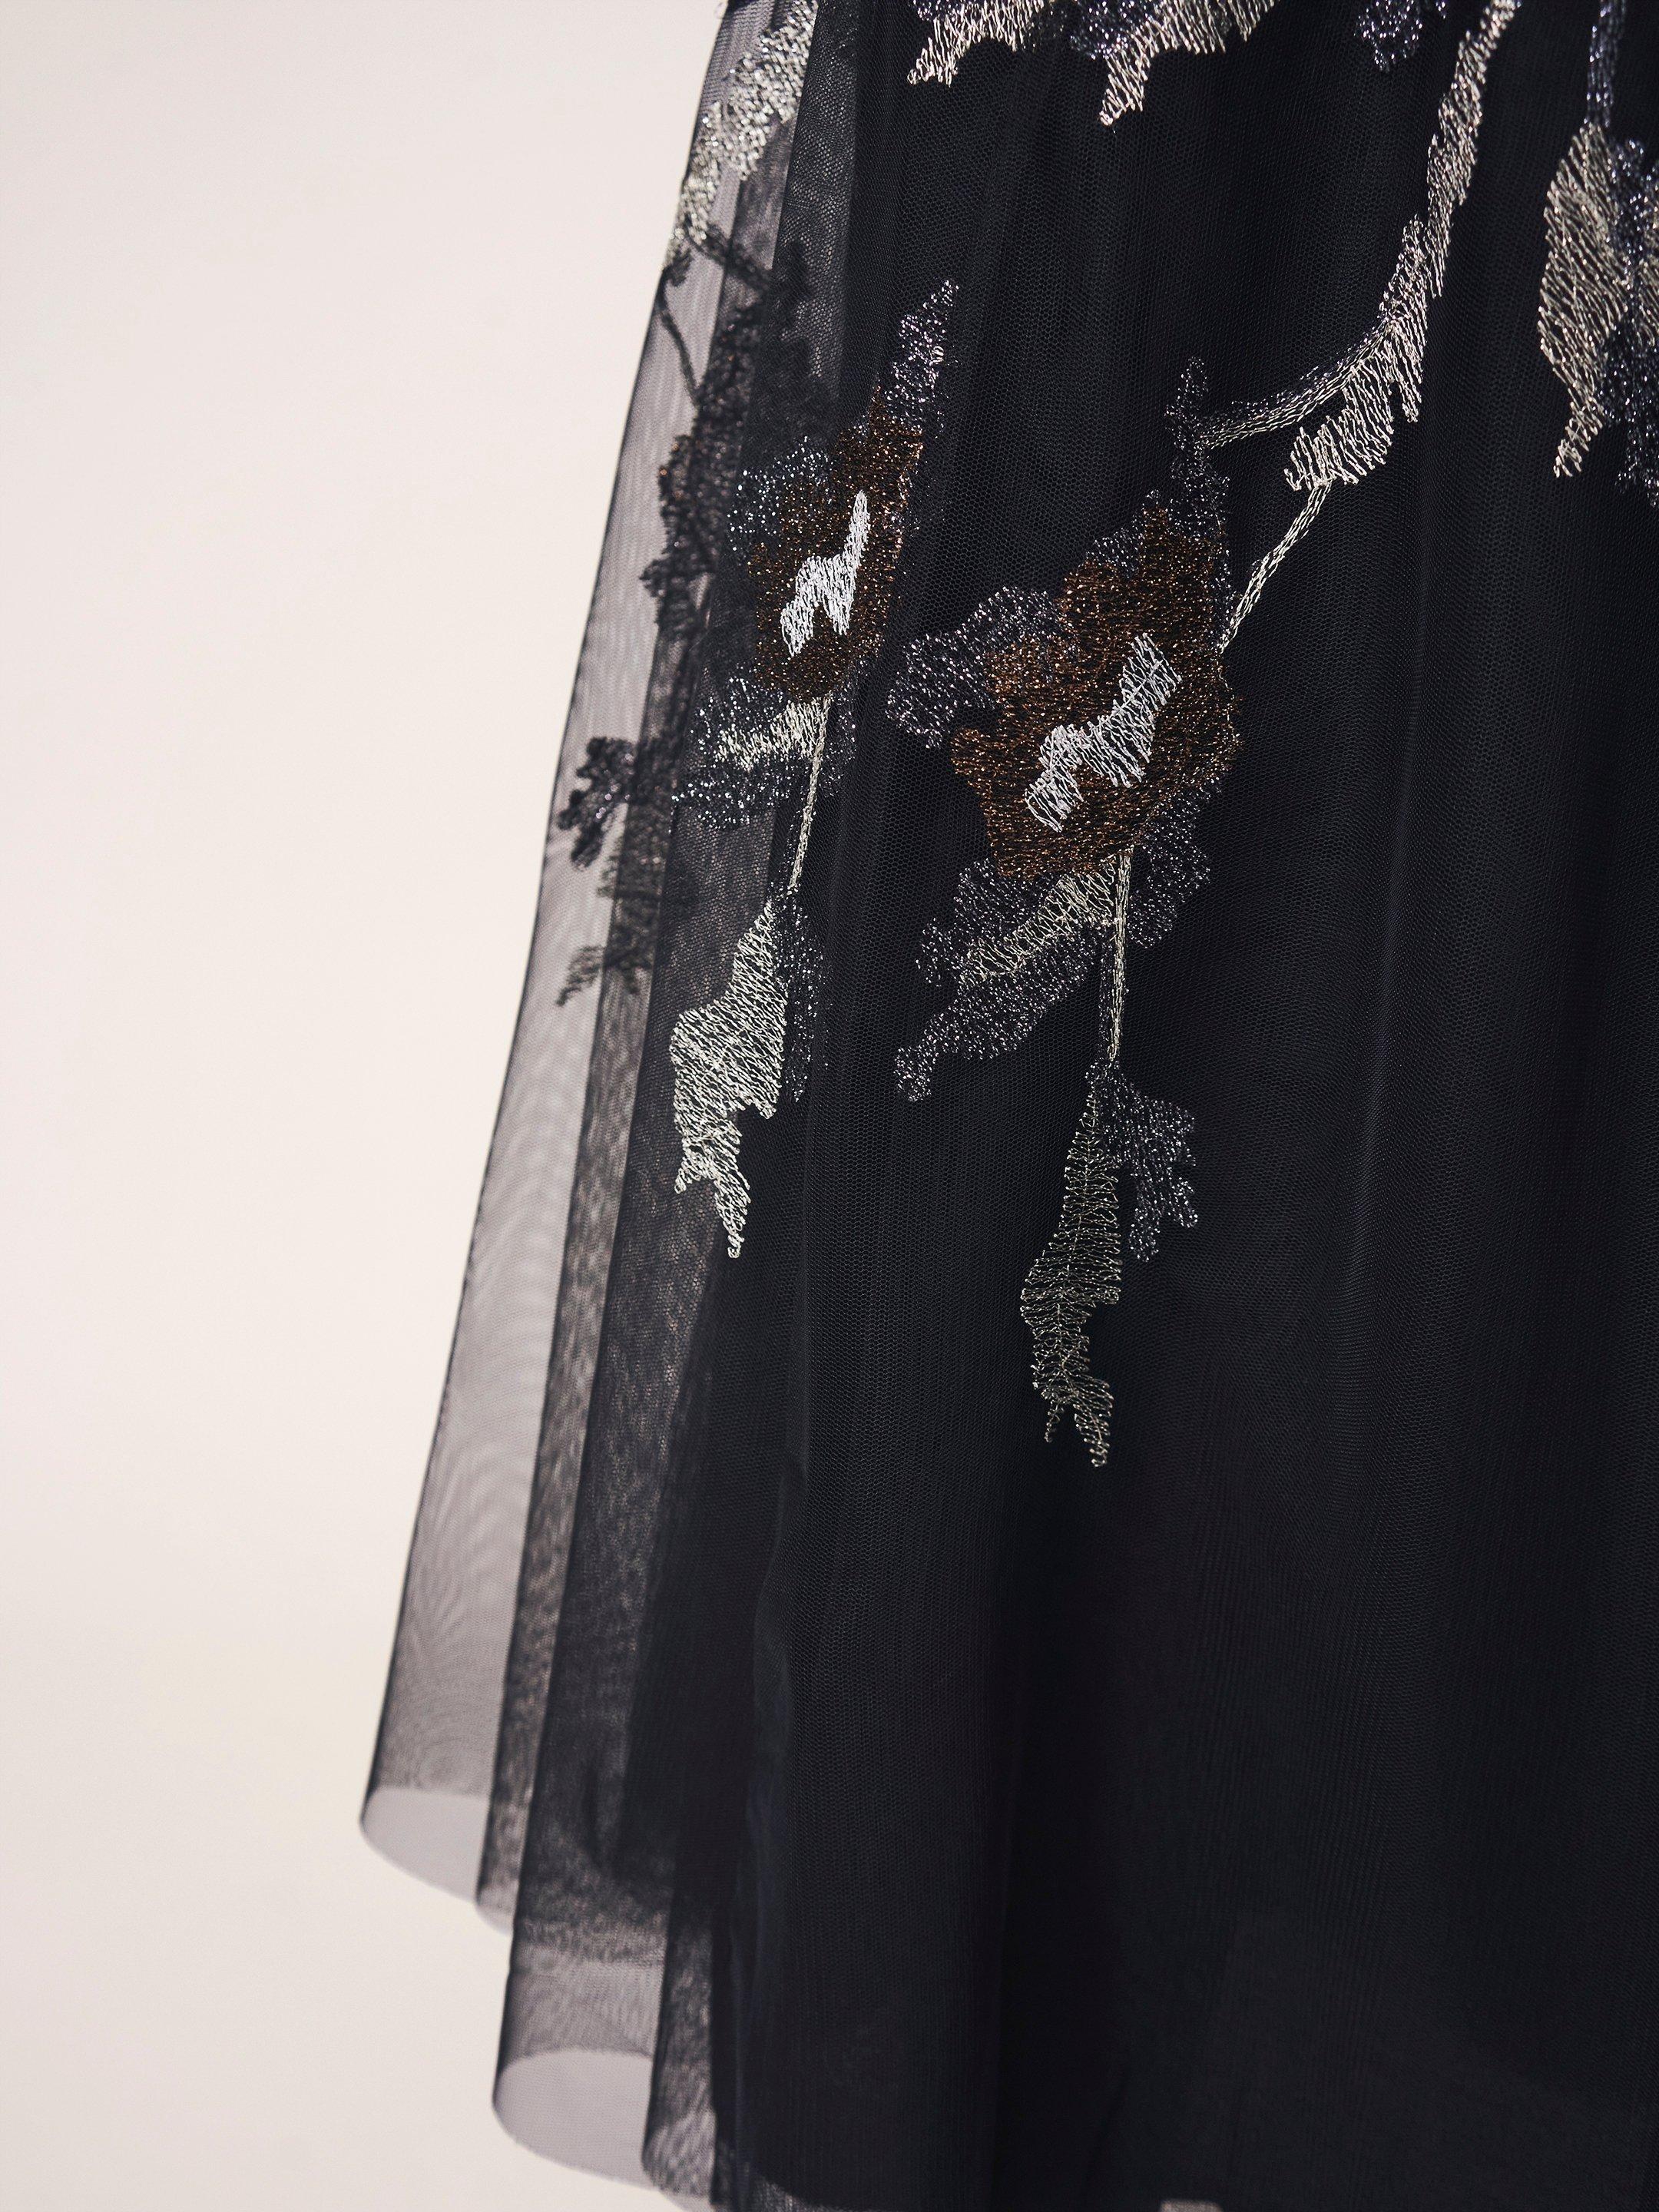 Embroidered Mesh Skirt in BLK MLT - MODEL DETAIL